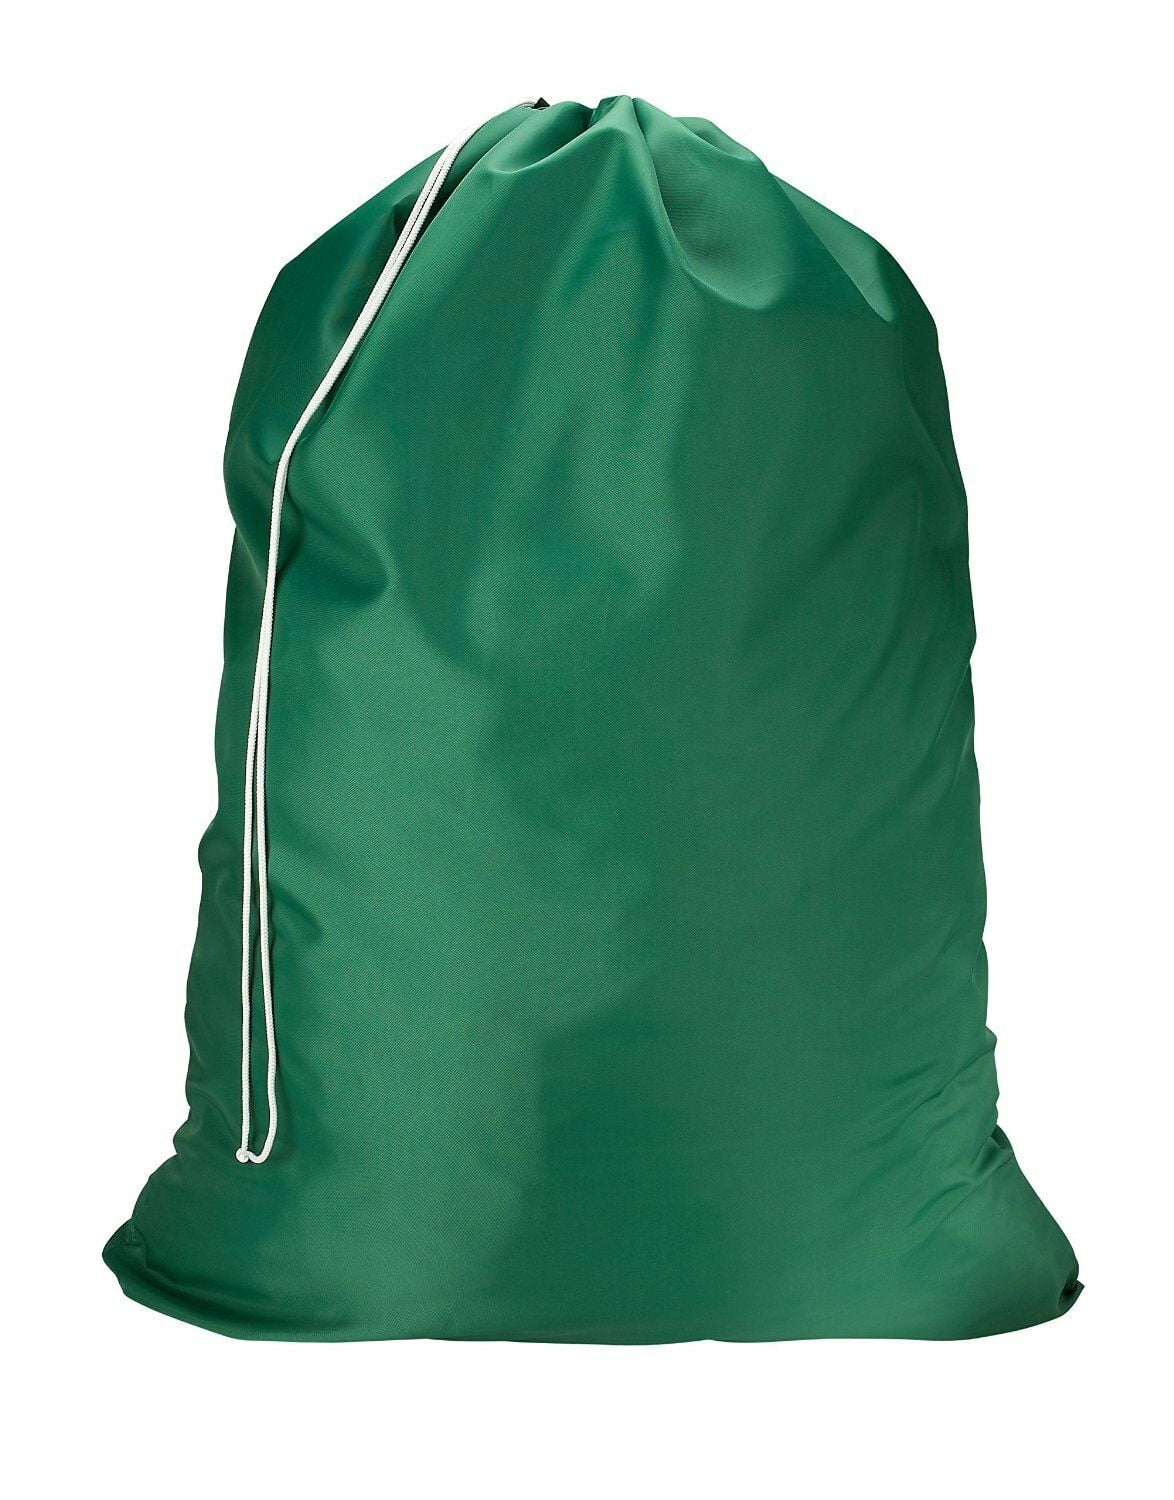 SET 2 Heavy Duty Extra Large Nylon Laundry Bag Locking Drawstring 30x40 Green. 